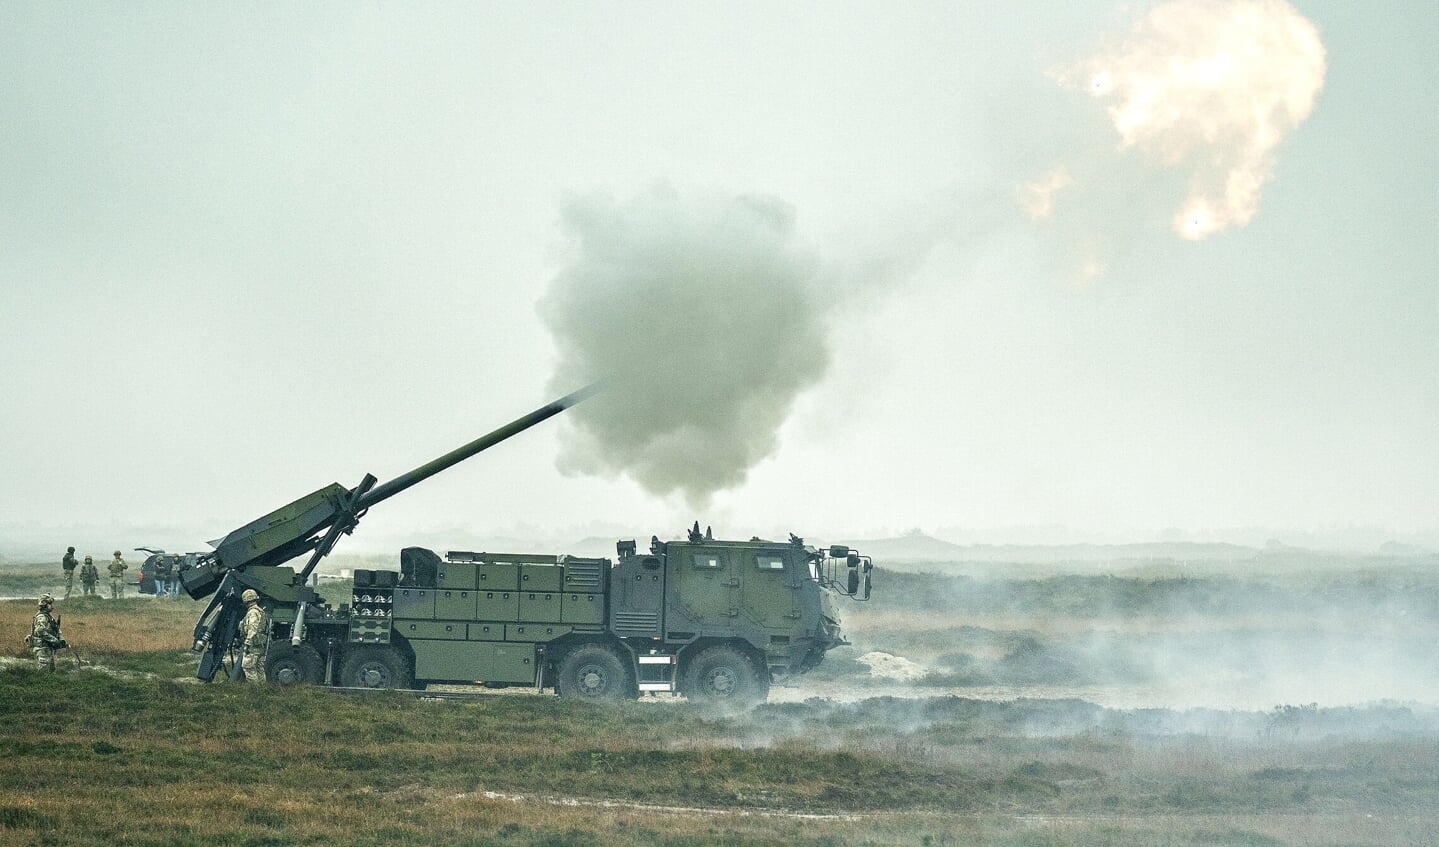 Forsvarsministeriet præsenterer artilleripjecen Caesar 8x8 i Oksbøl fredag den 12. november 2021.